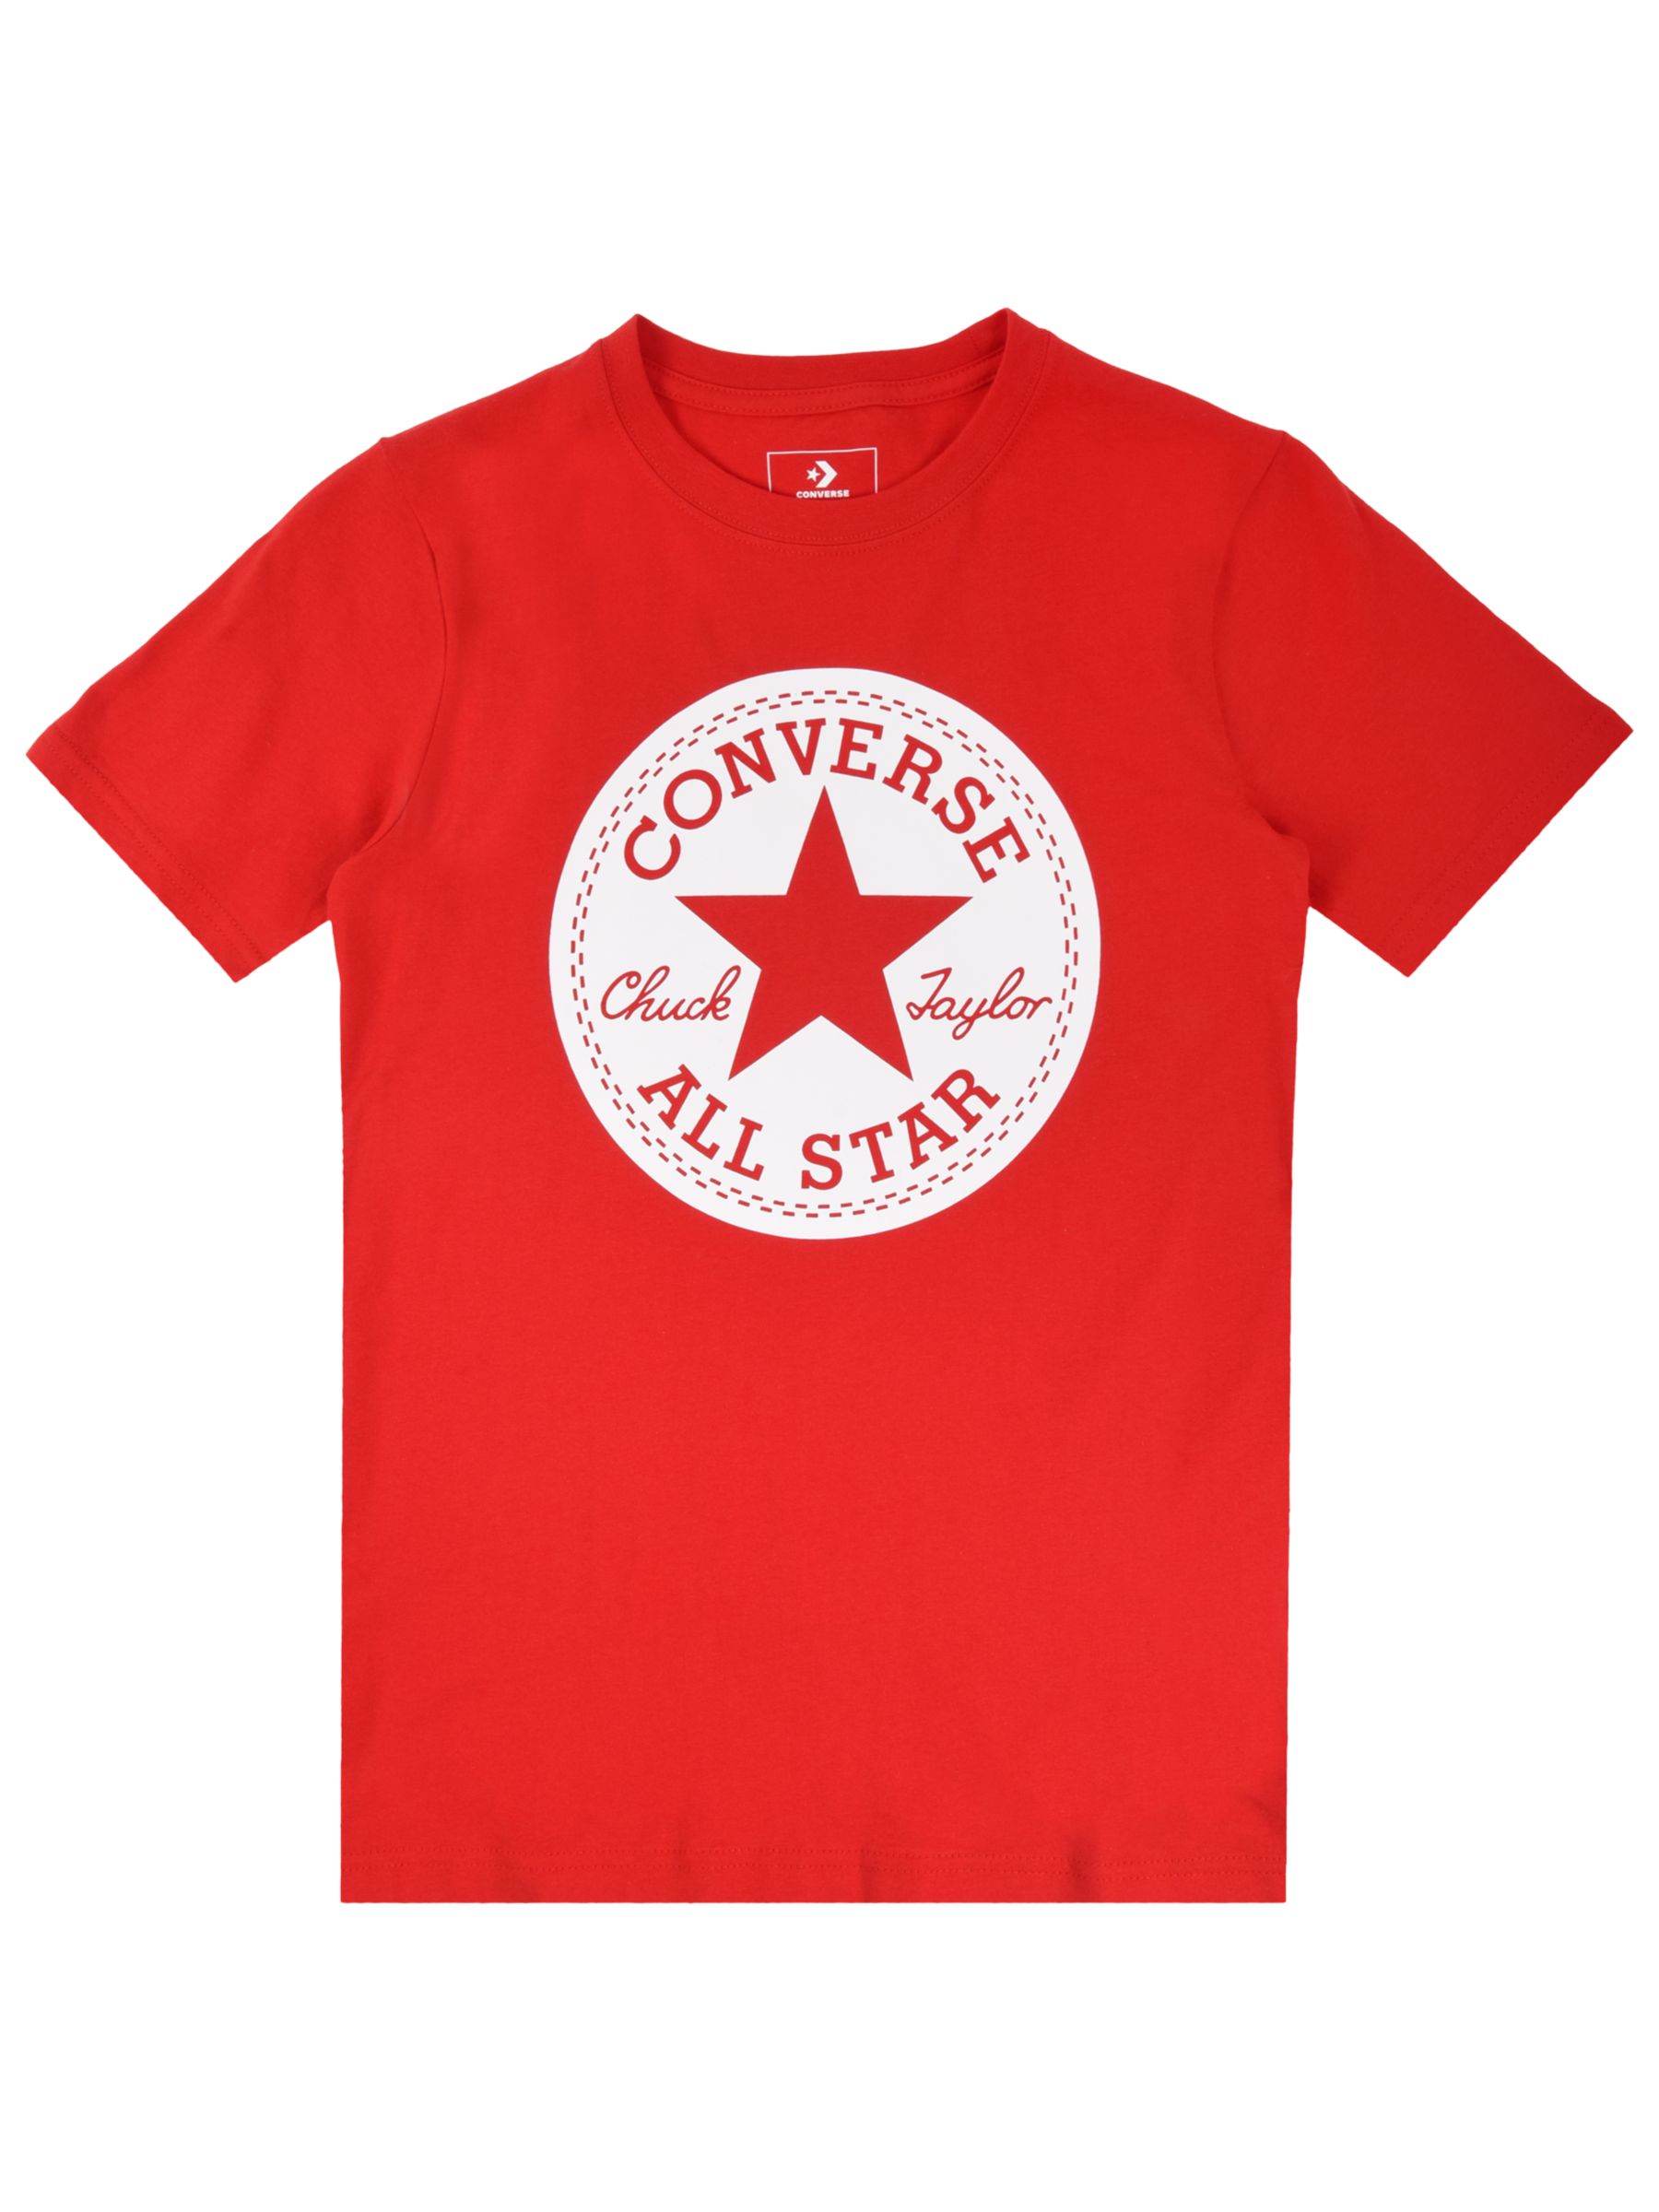 converse t shirt red